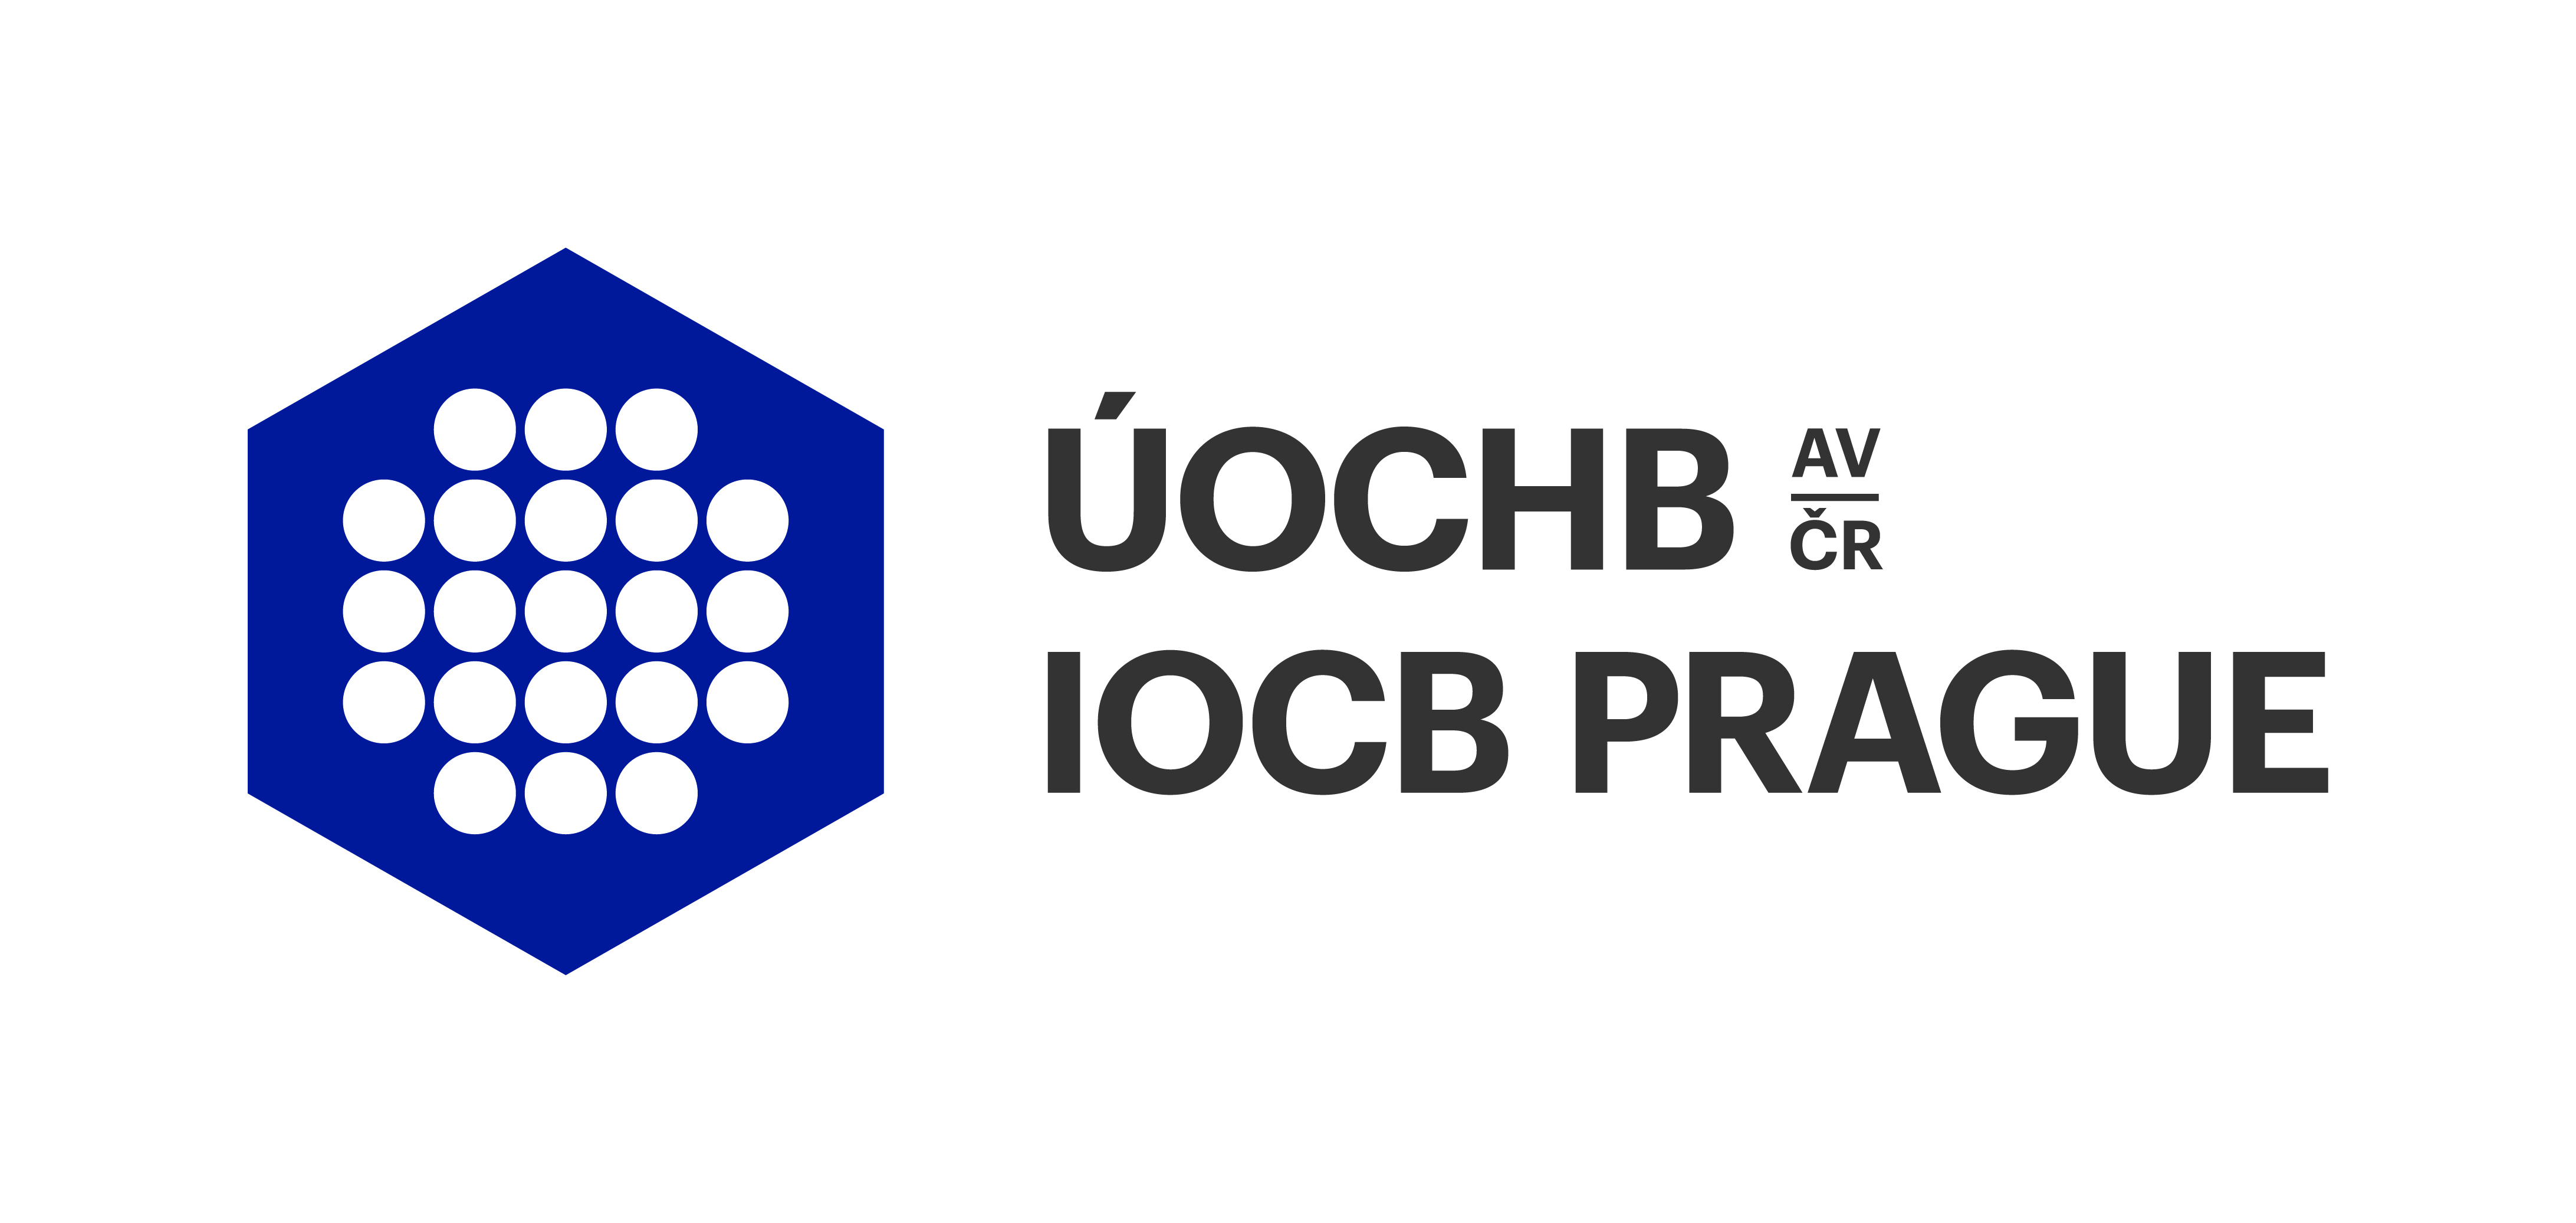 ÚOCHB logo